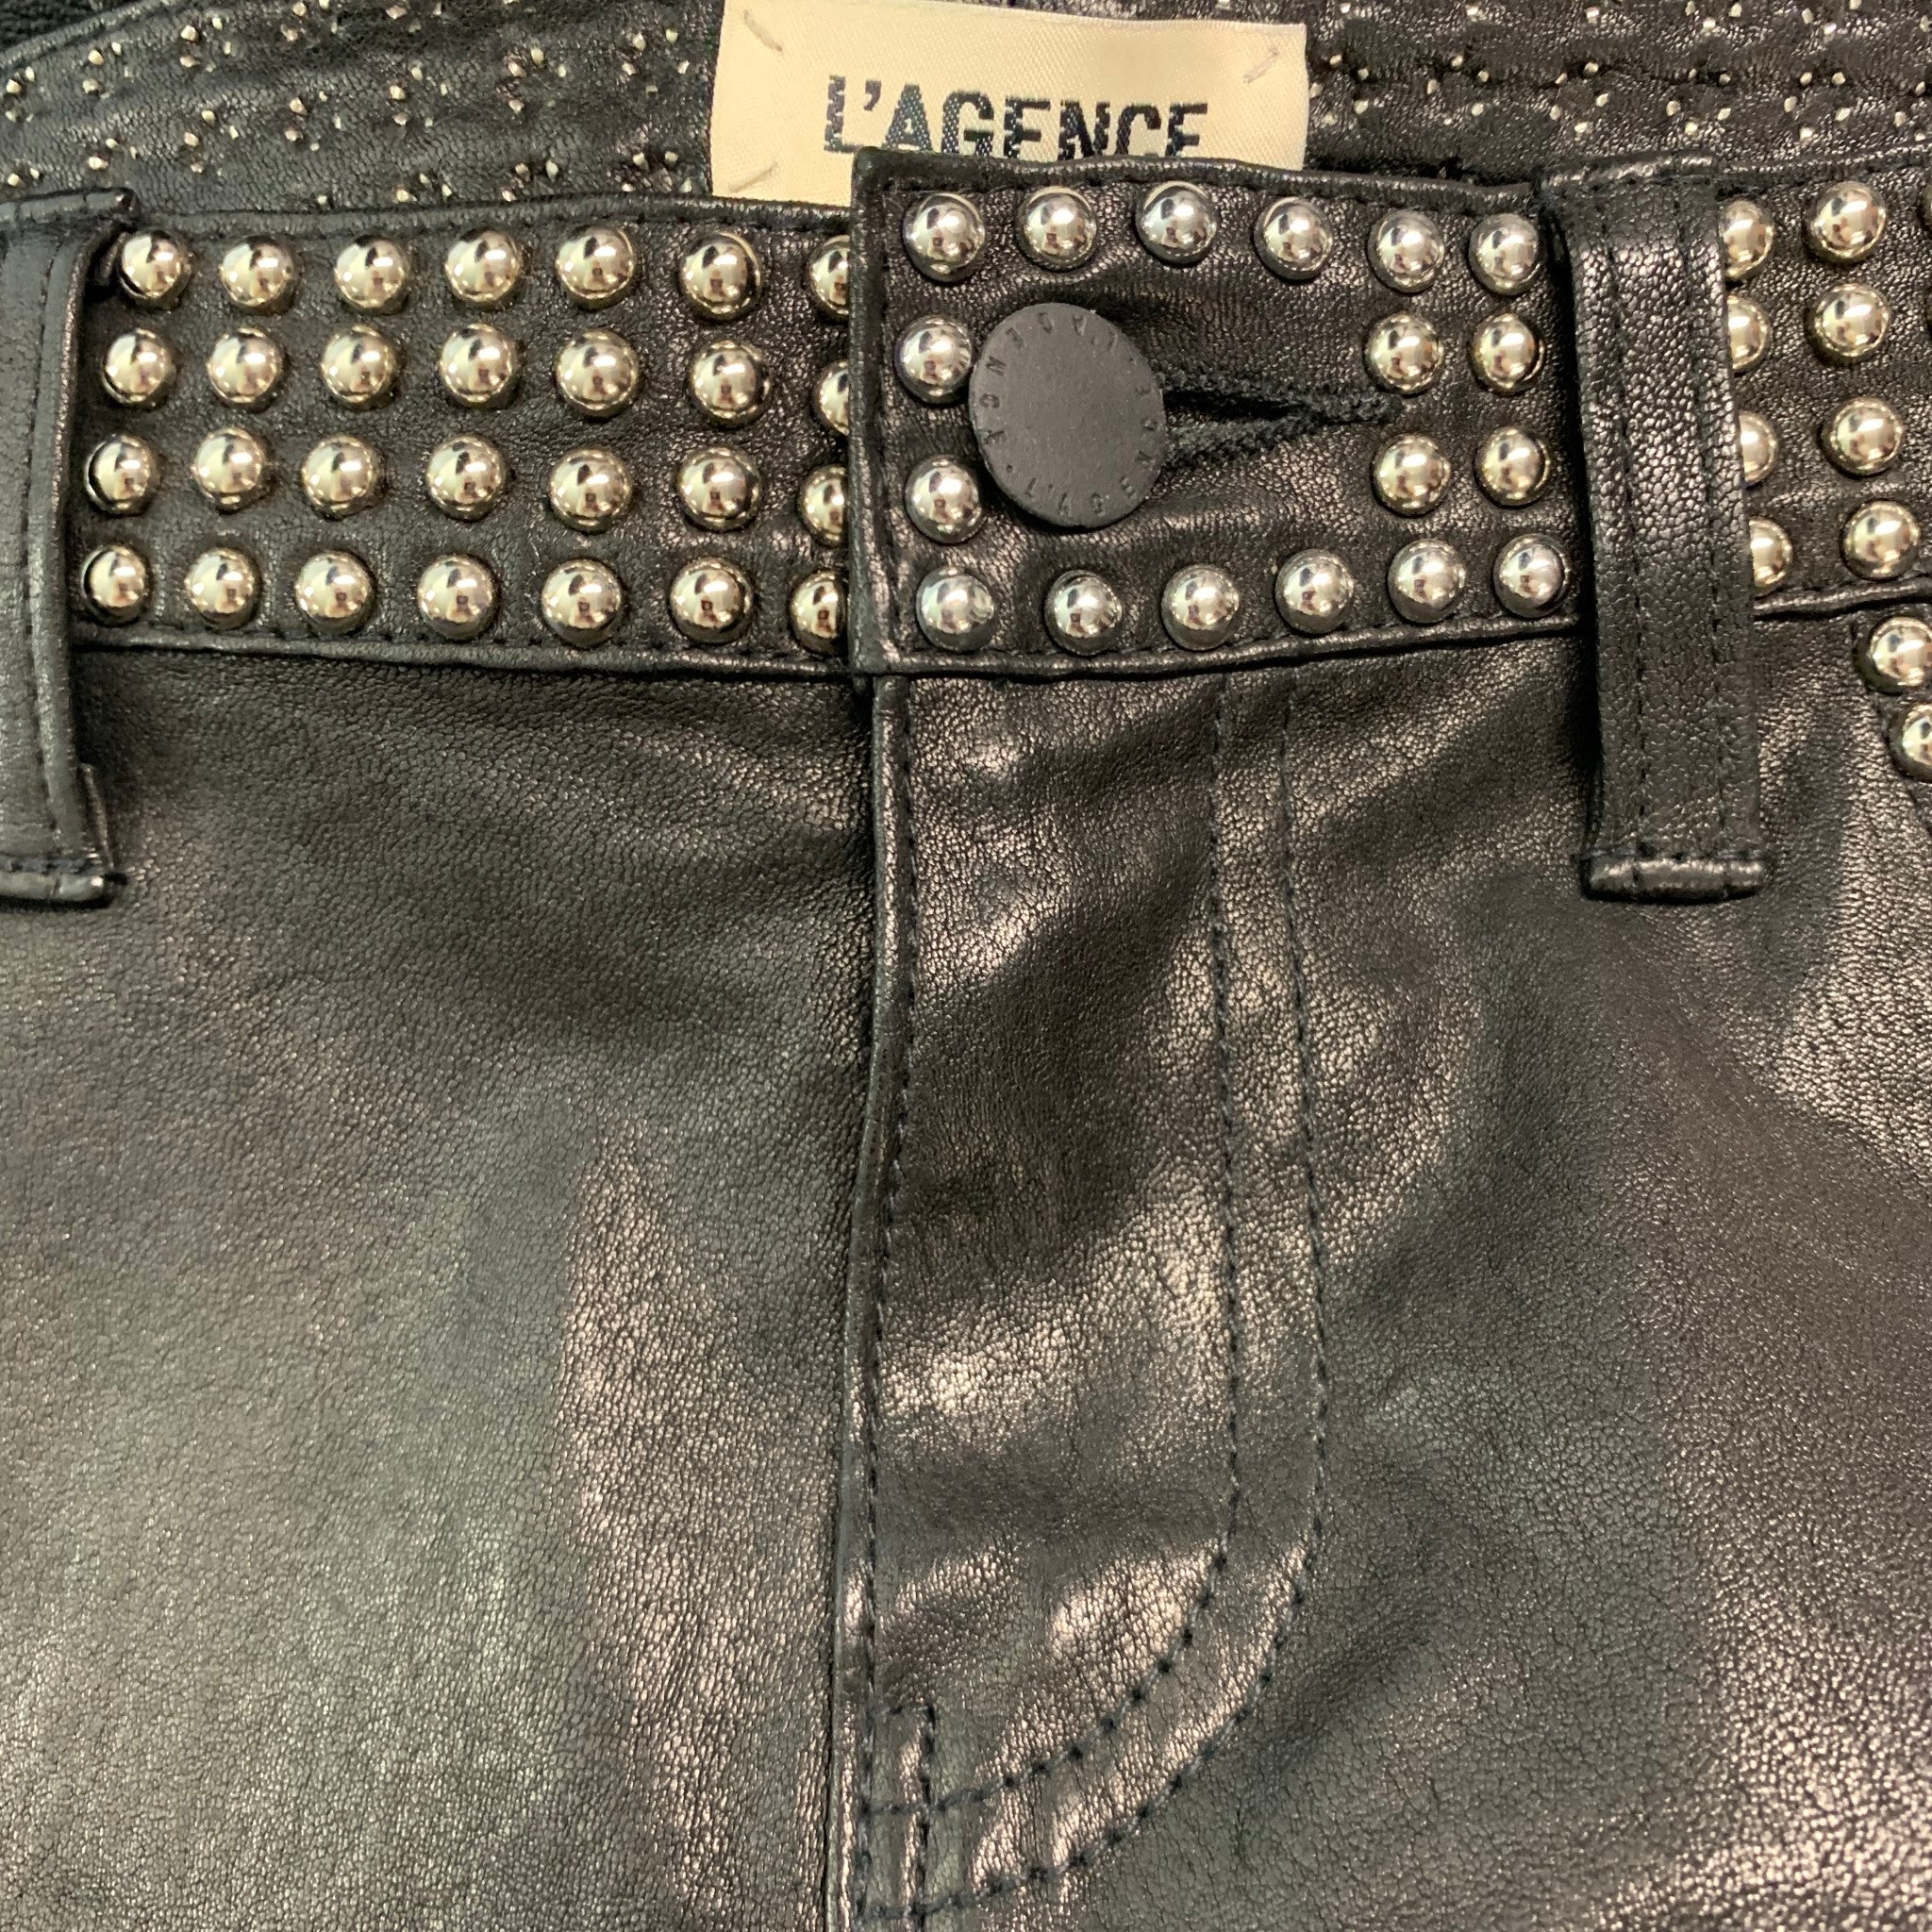 Black Leather Patchwork Pants — Leatheracci